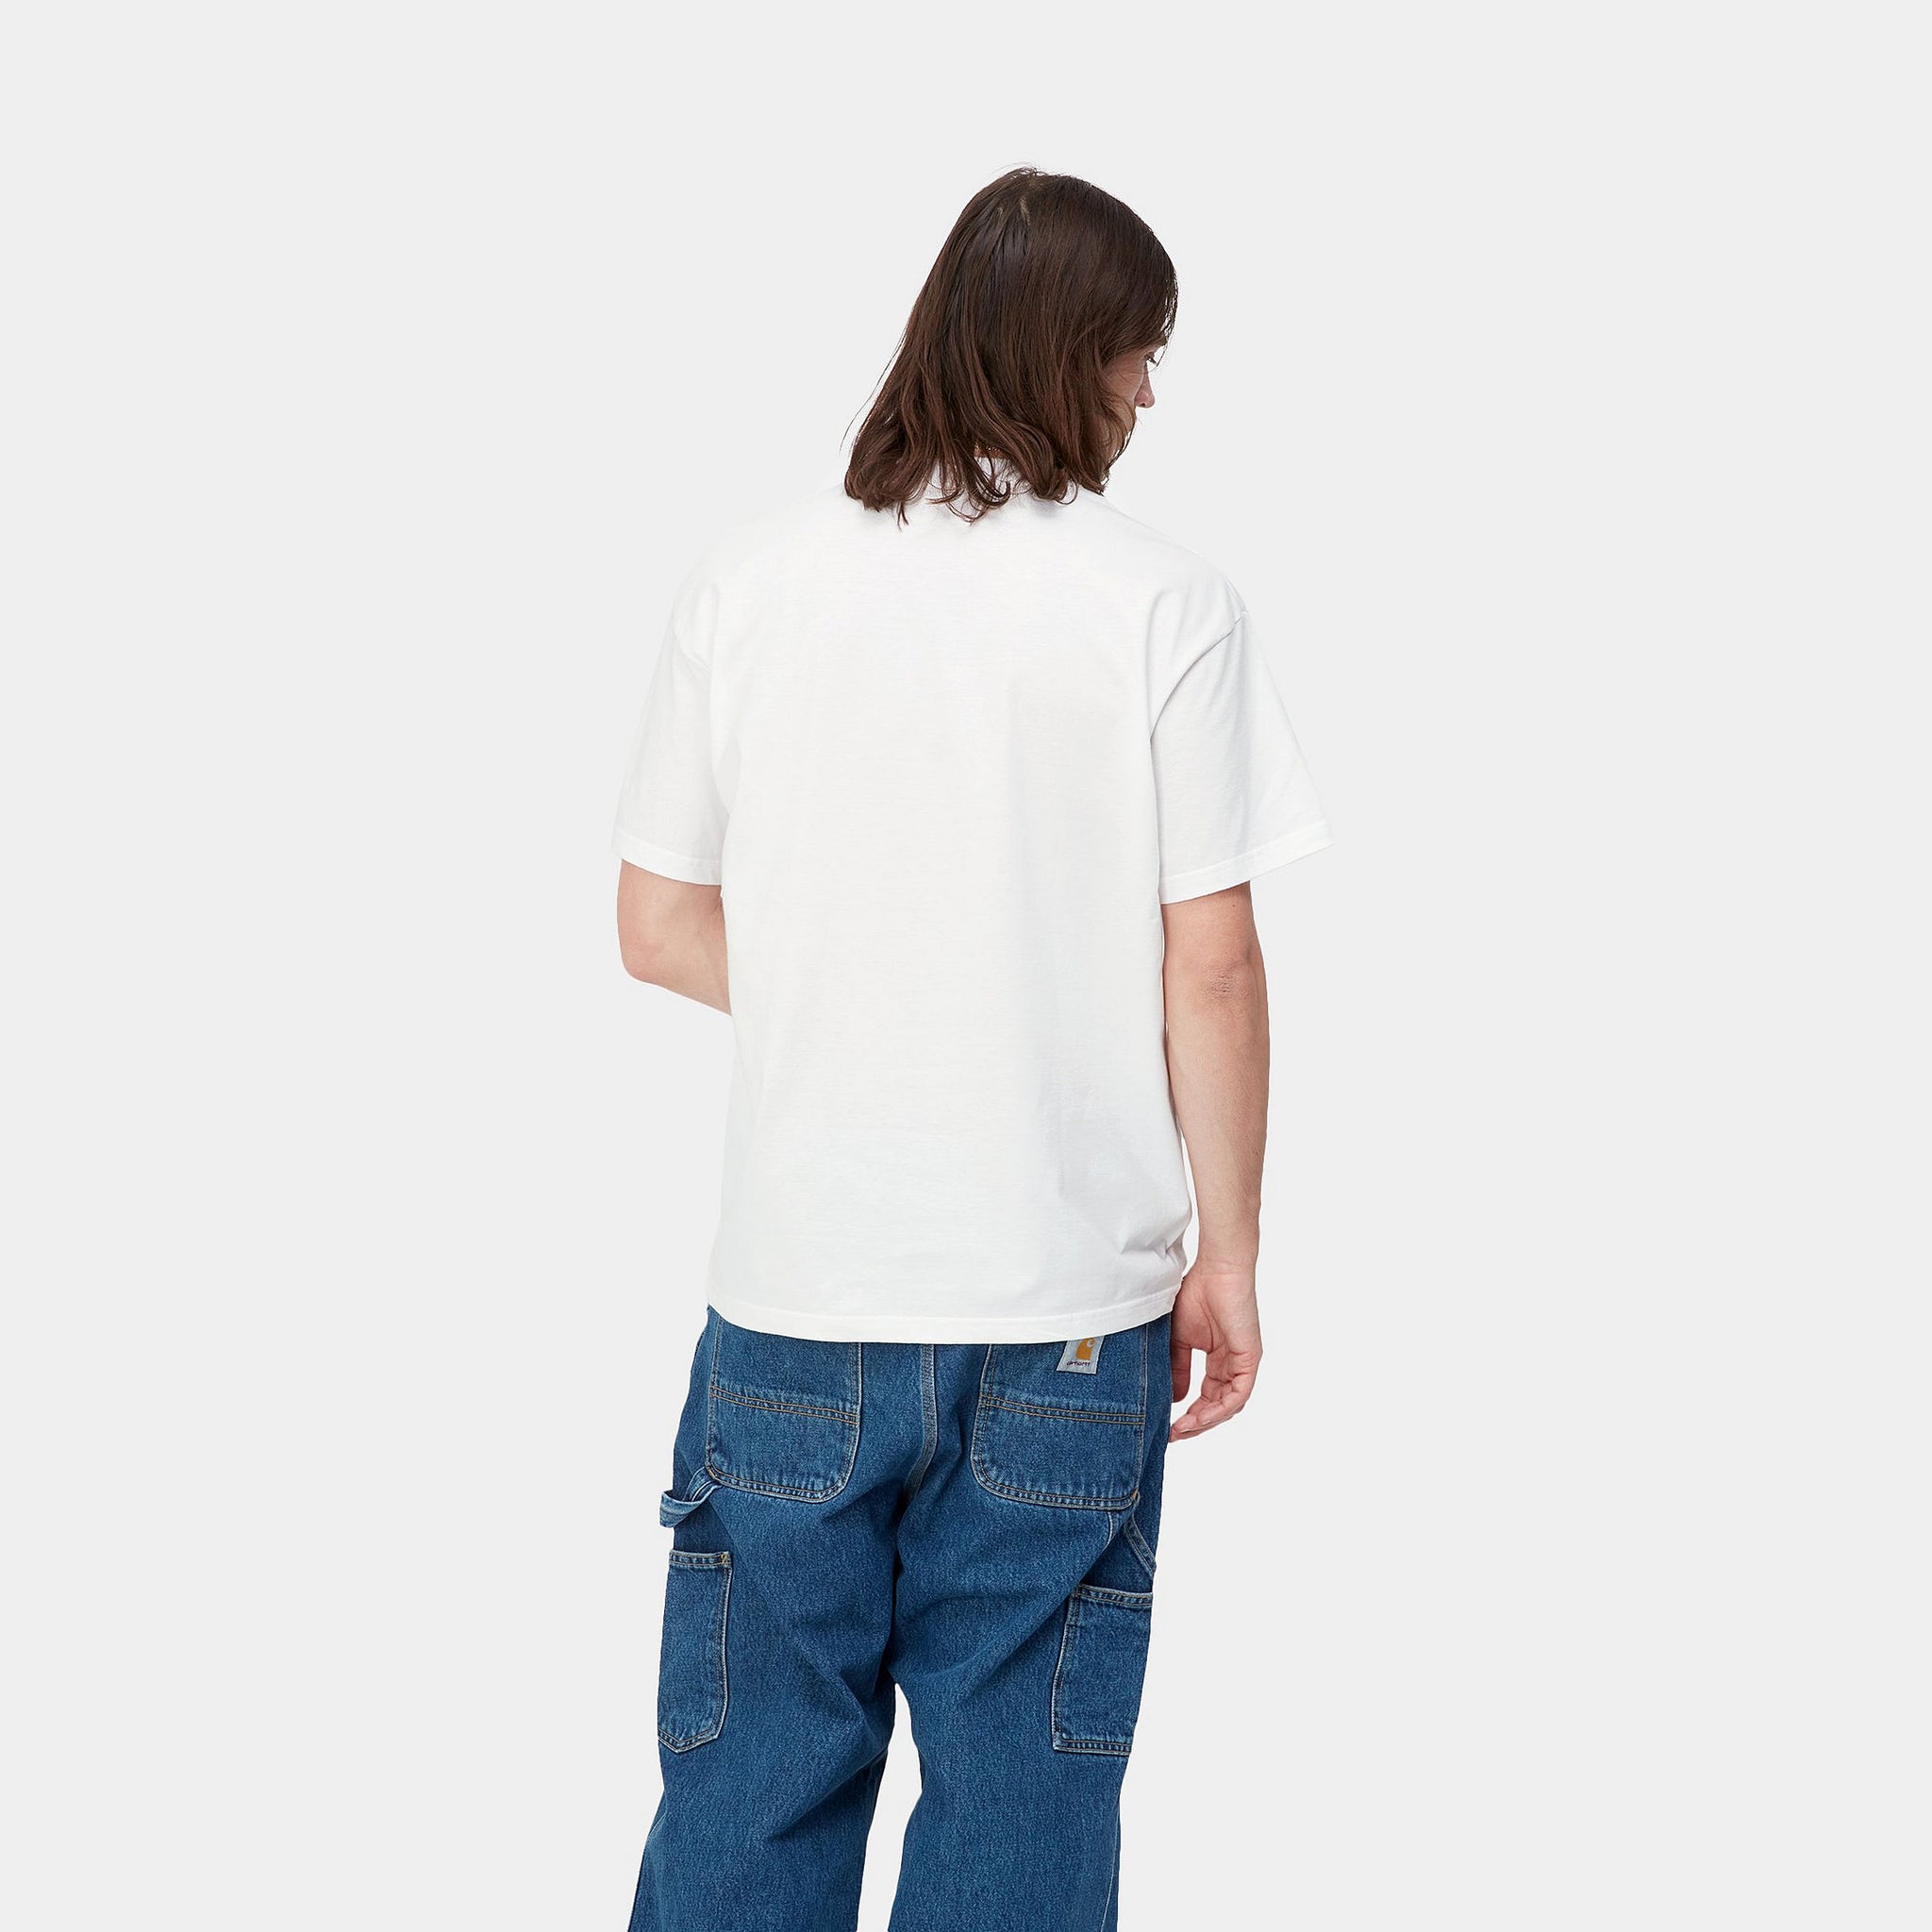 S/S Archive Girls T-Shirt Organic Cotton Single Jersey, 175 g/m² (White)